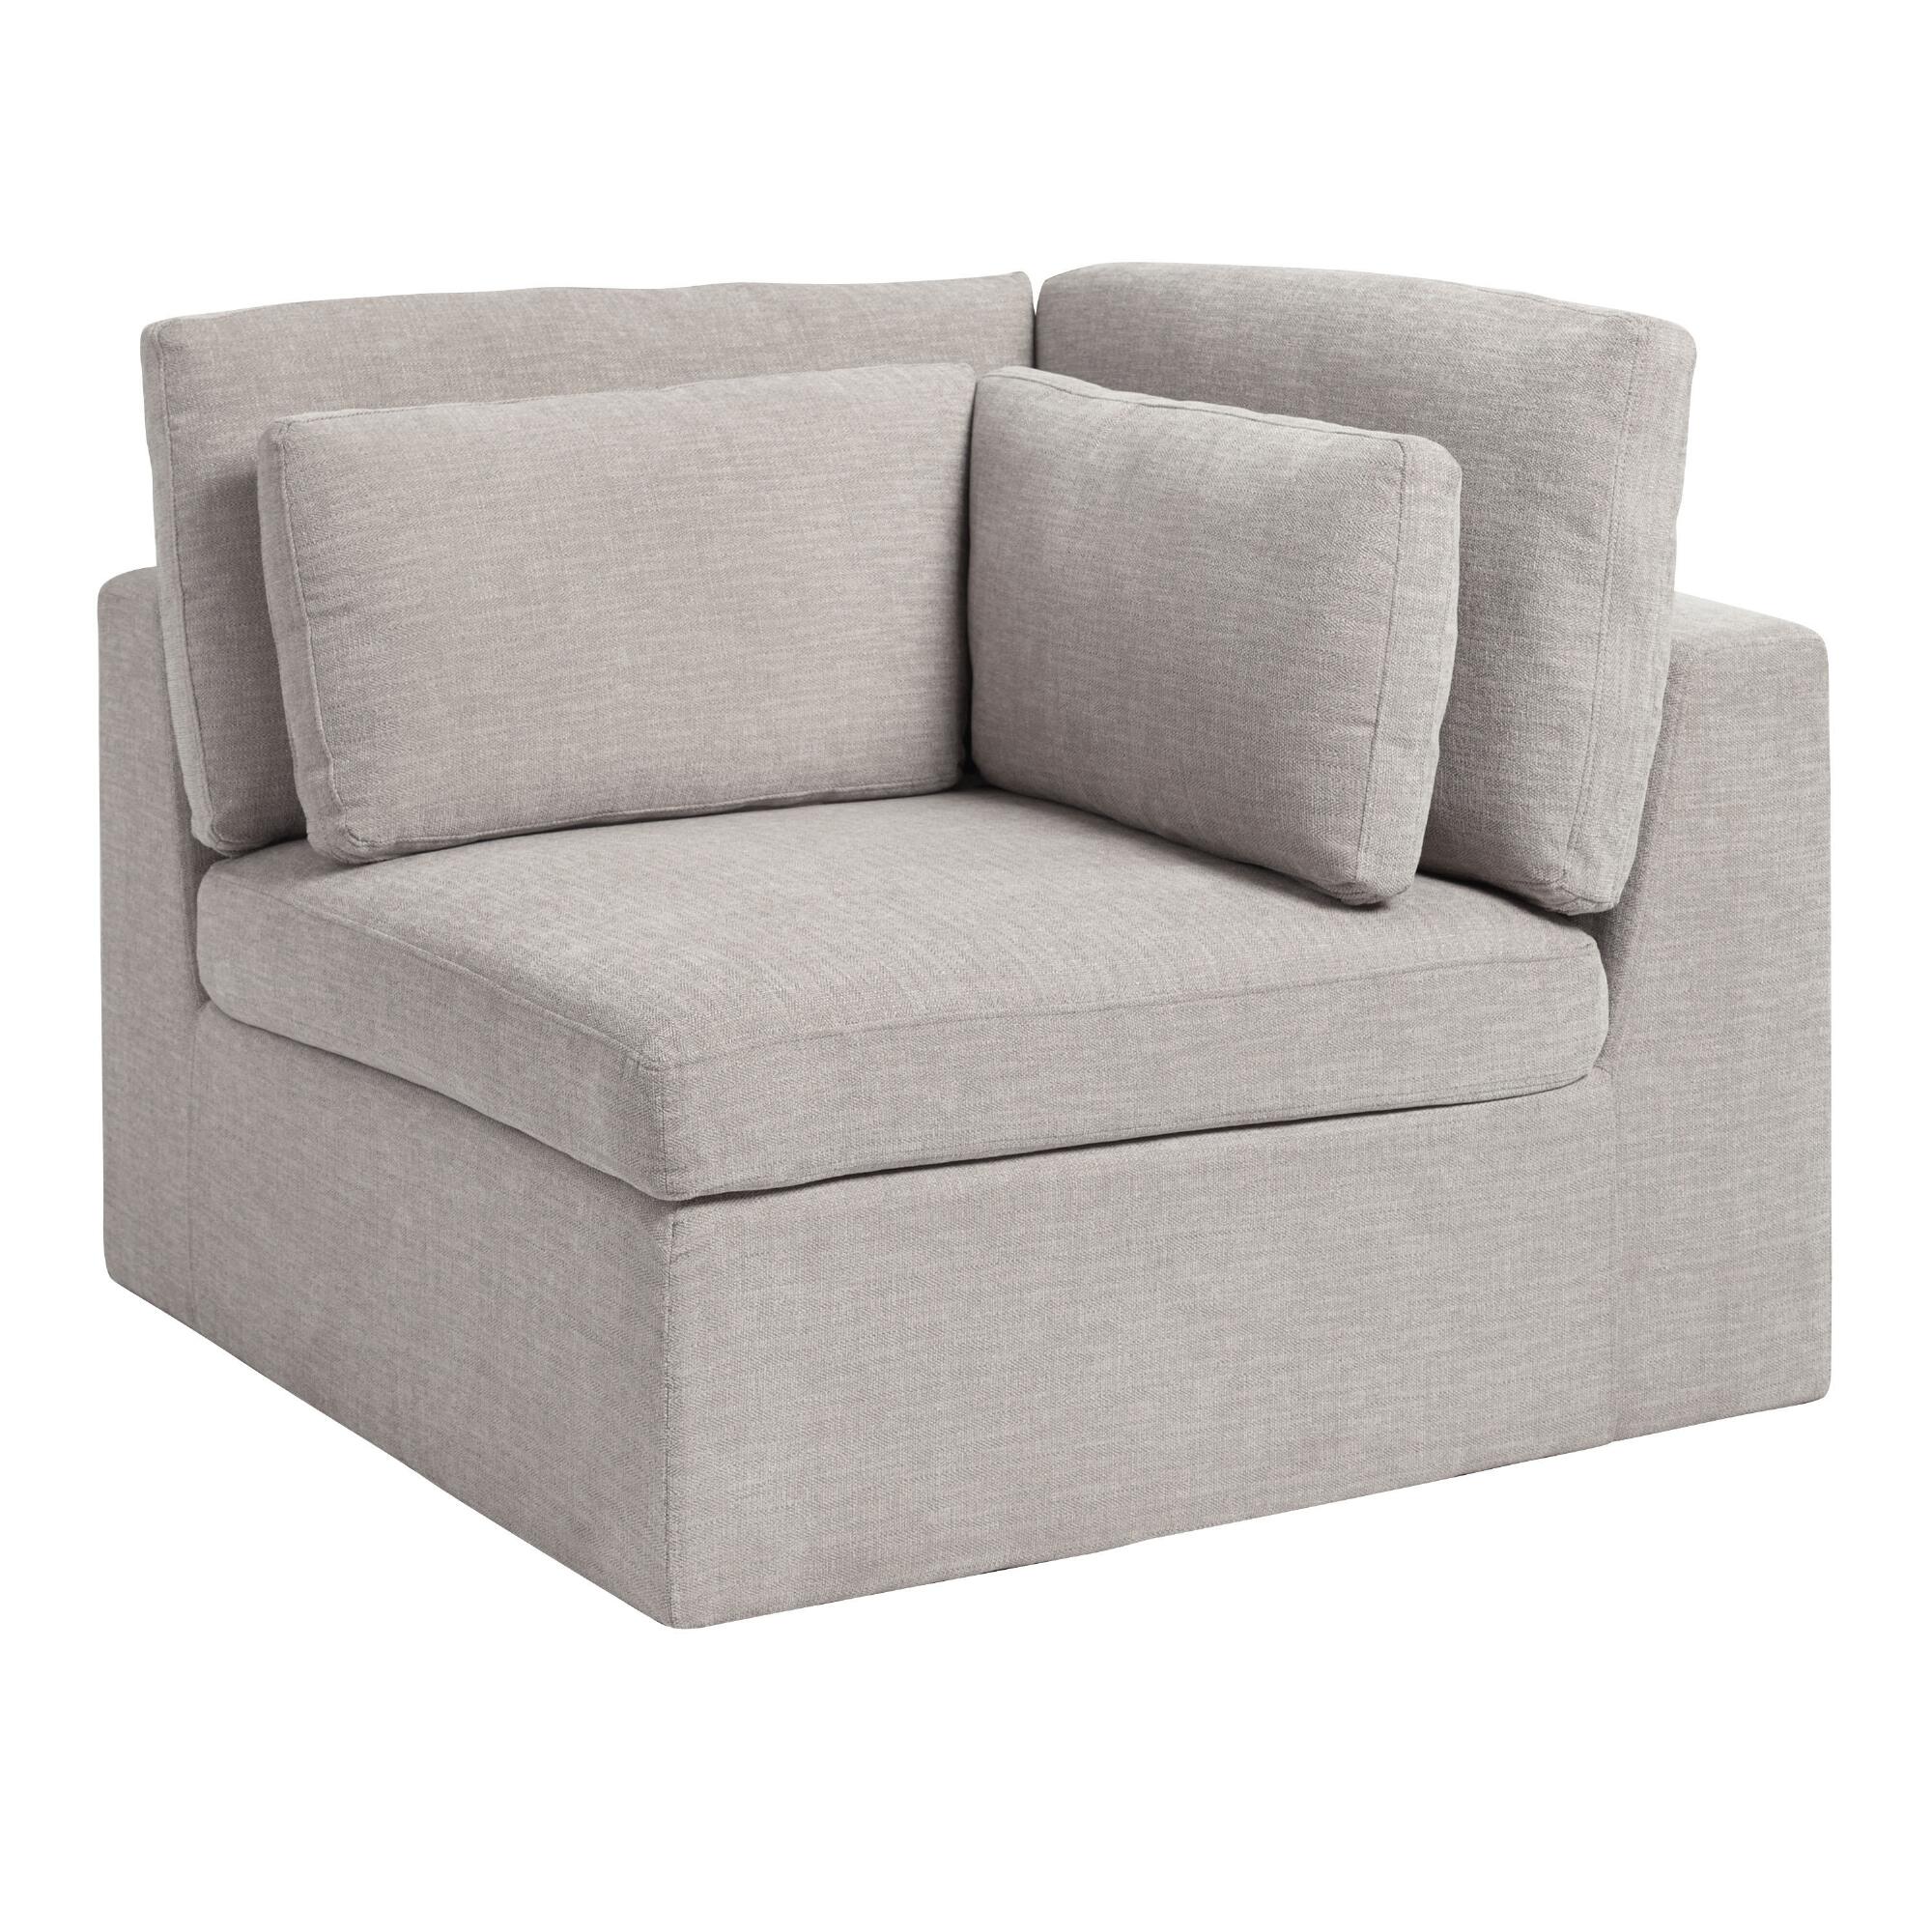 Gray Emmett Modular Sectional Corner Chair - Polyester by World Market